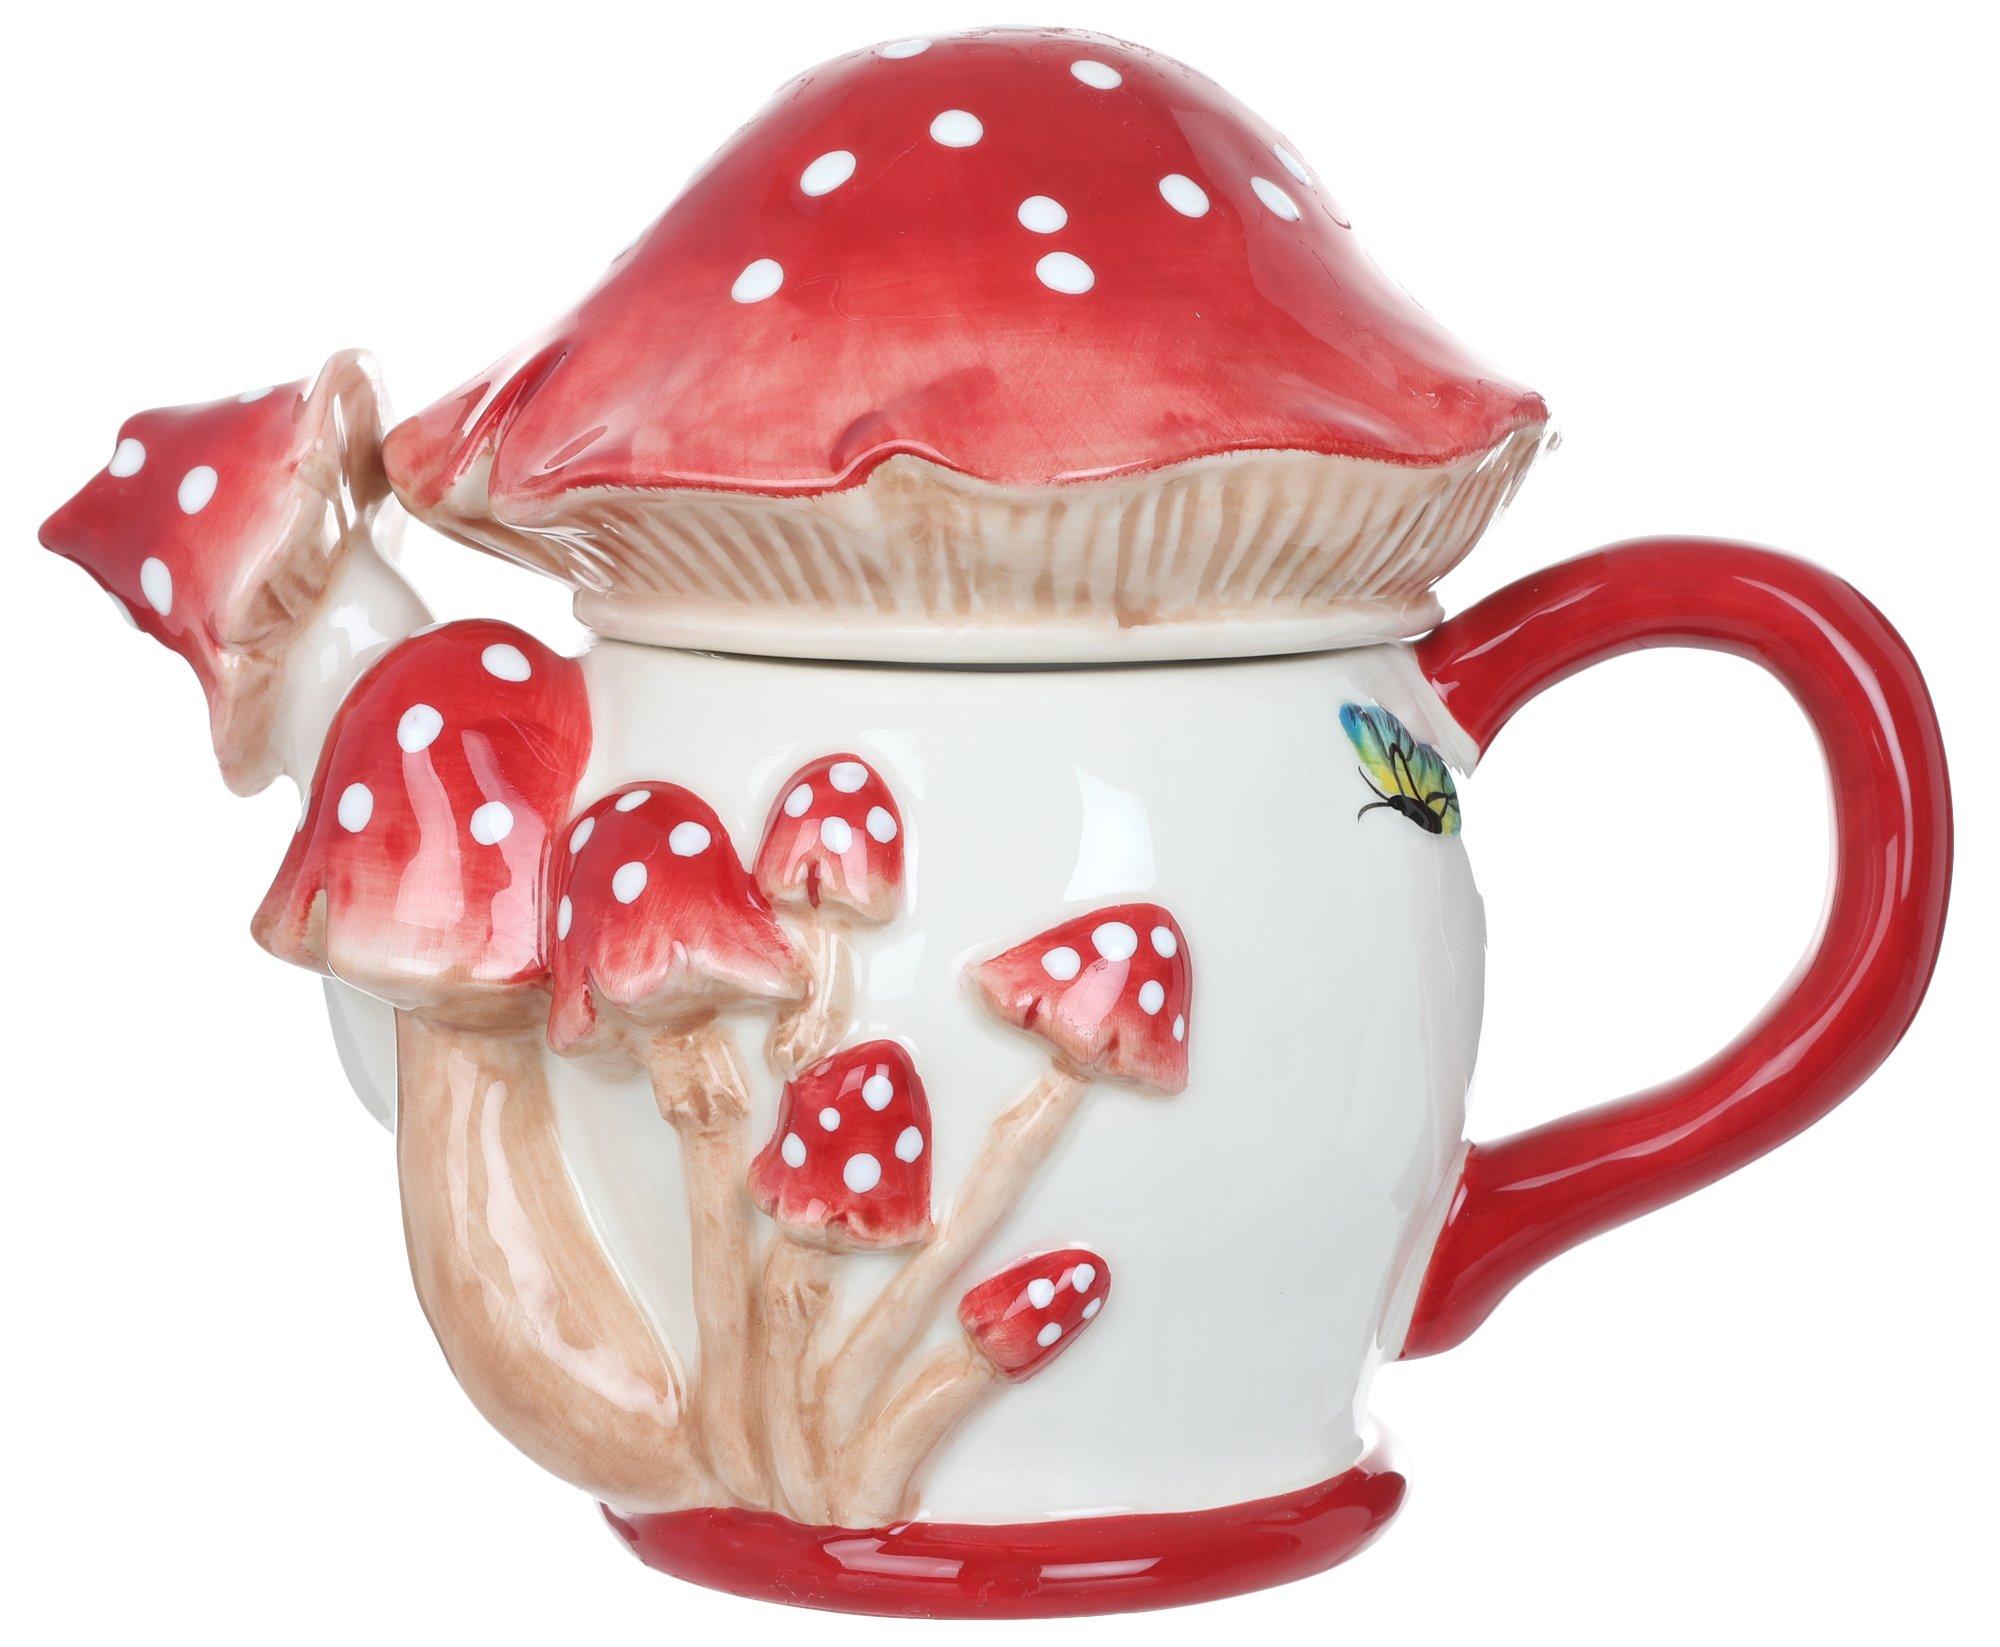 8in Mushroom Teapot